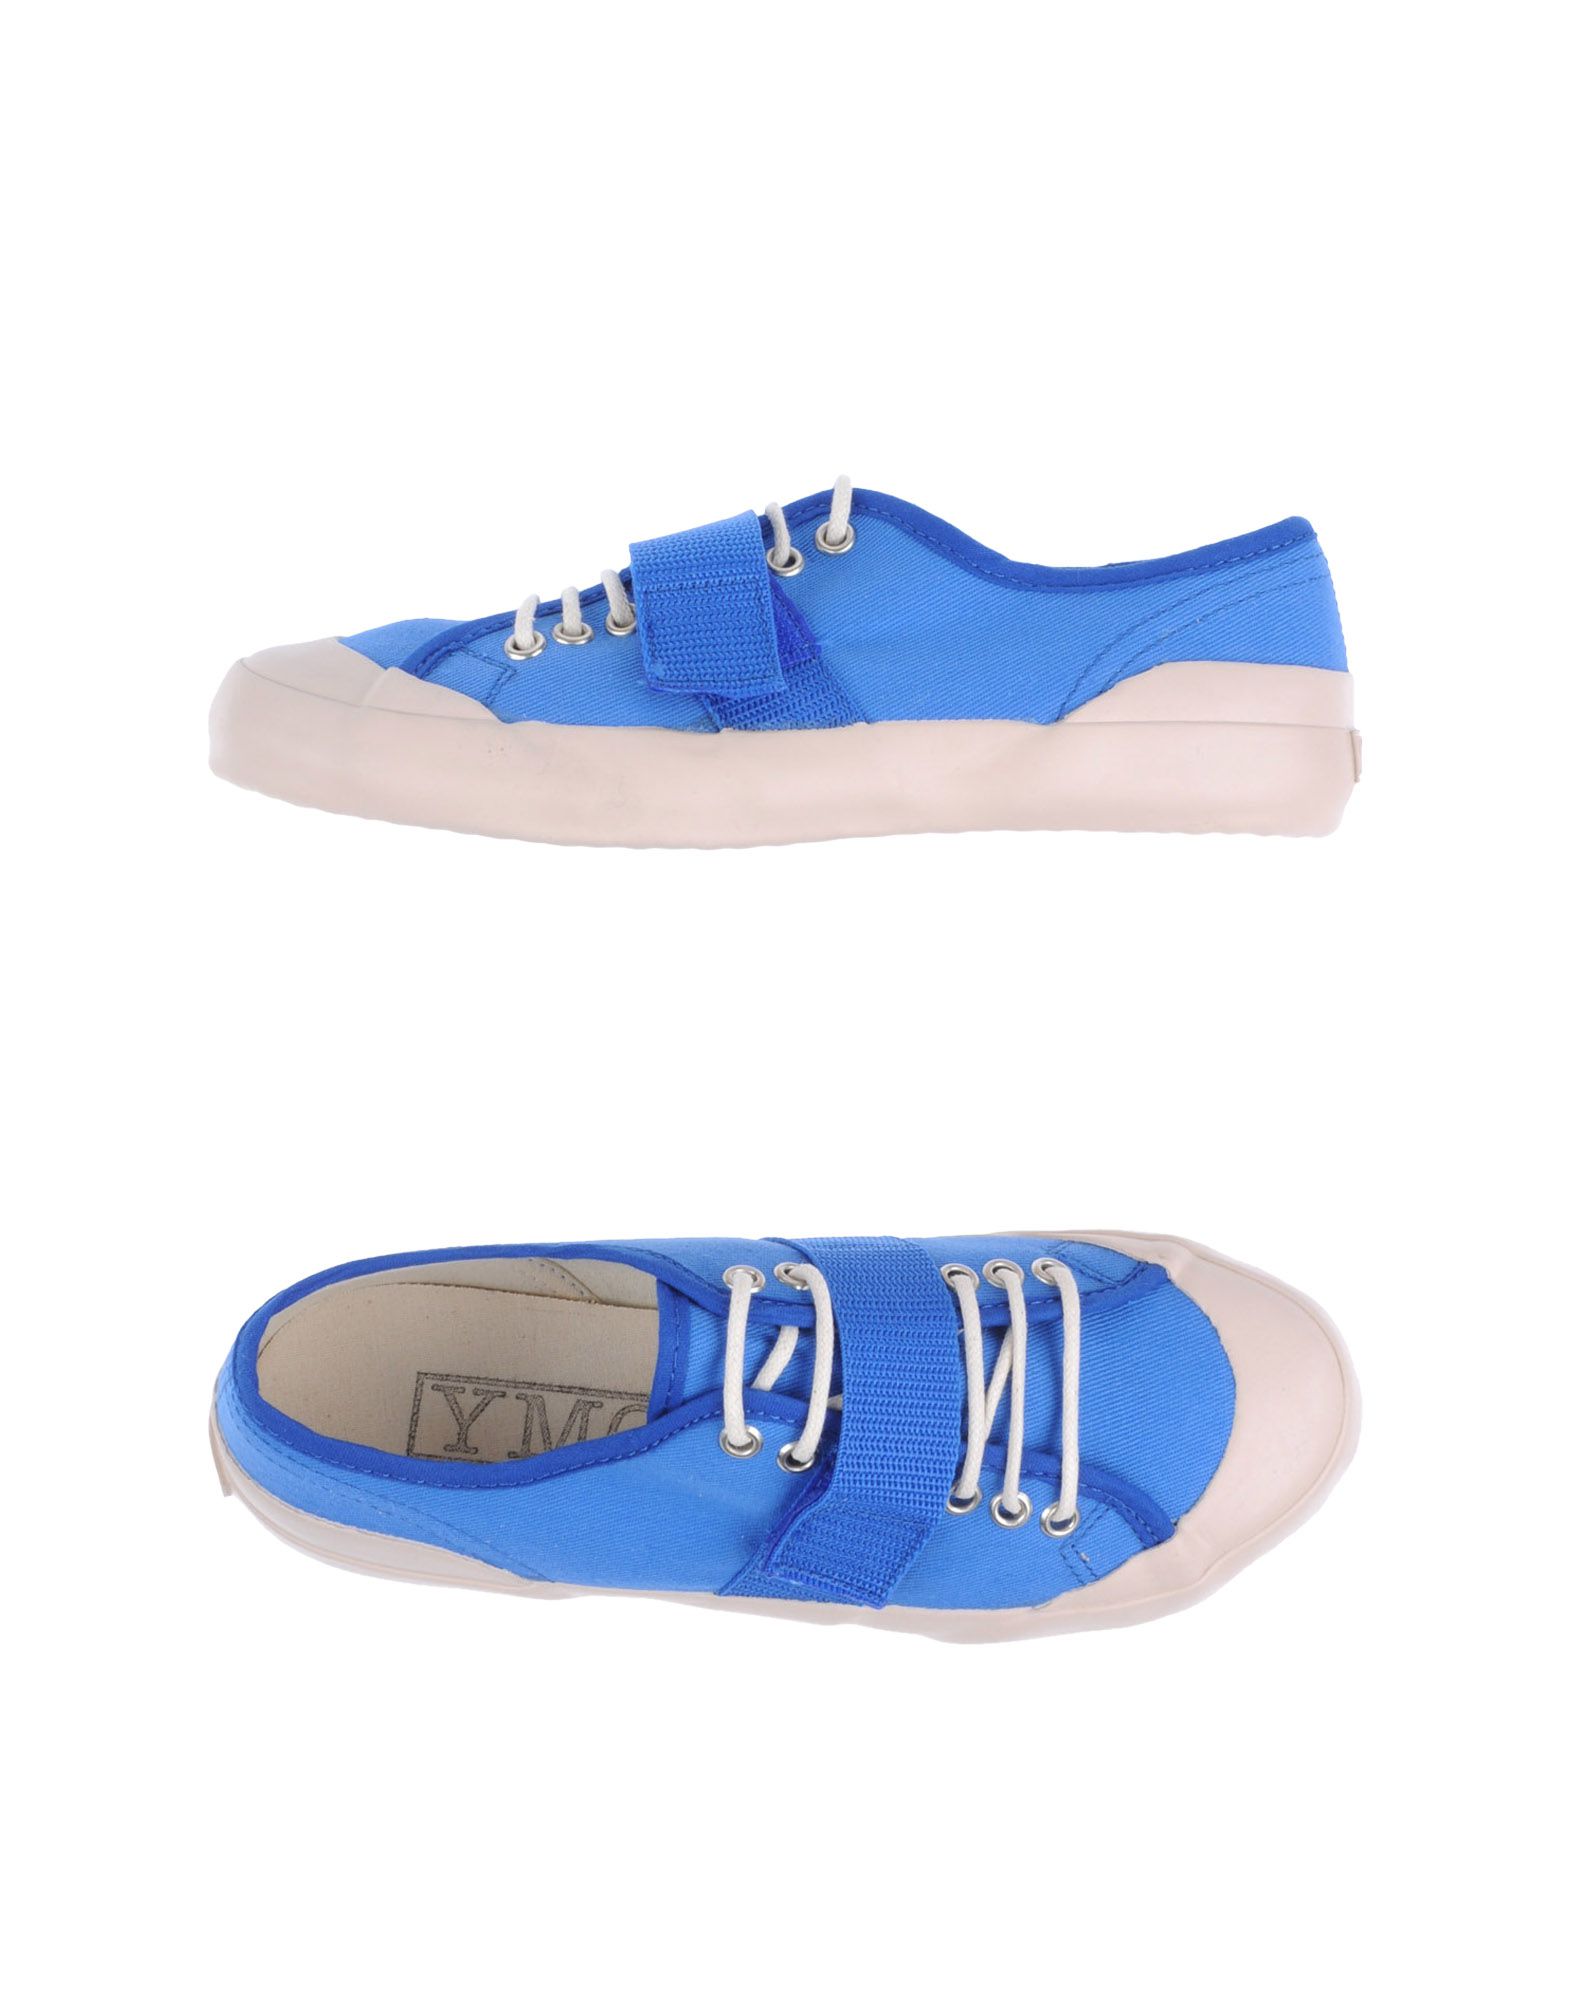 Foto Ymc You Must Create Sneakers Mujer Azul pastel